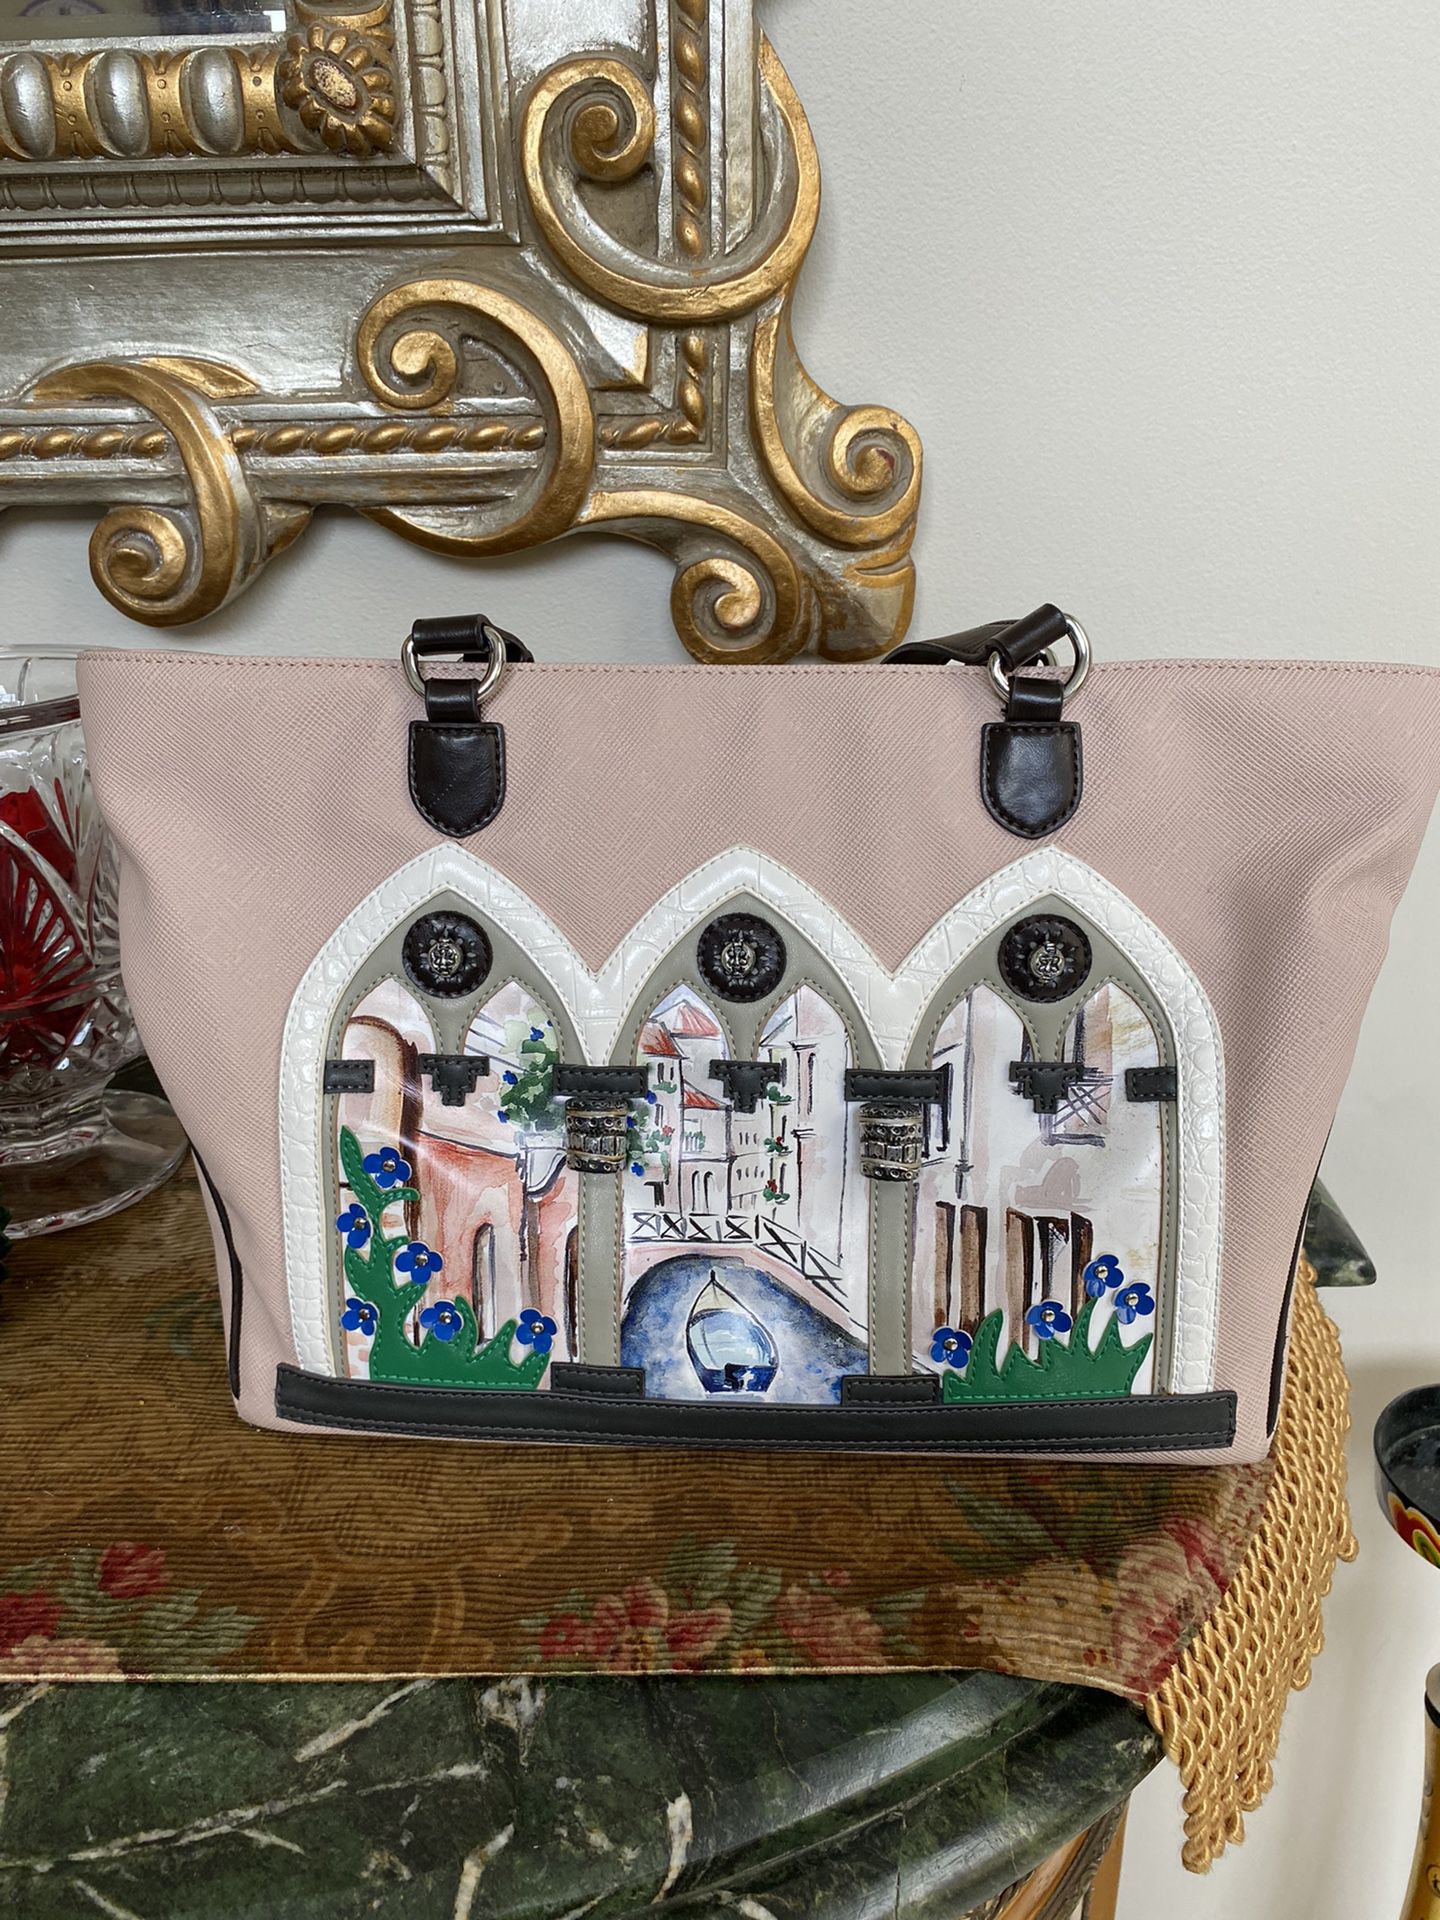 Braccialini Tia Vintage Pink Venice Handbag Purse for Sale in Boca